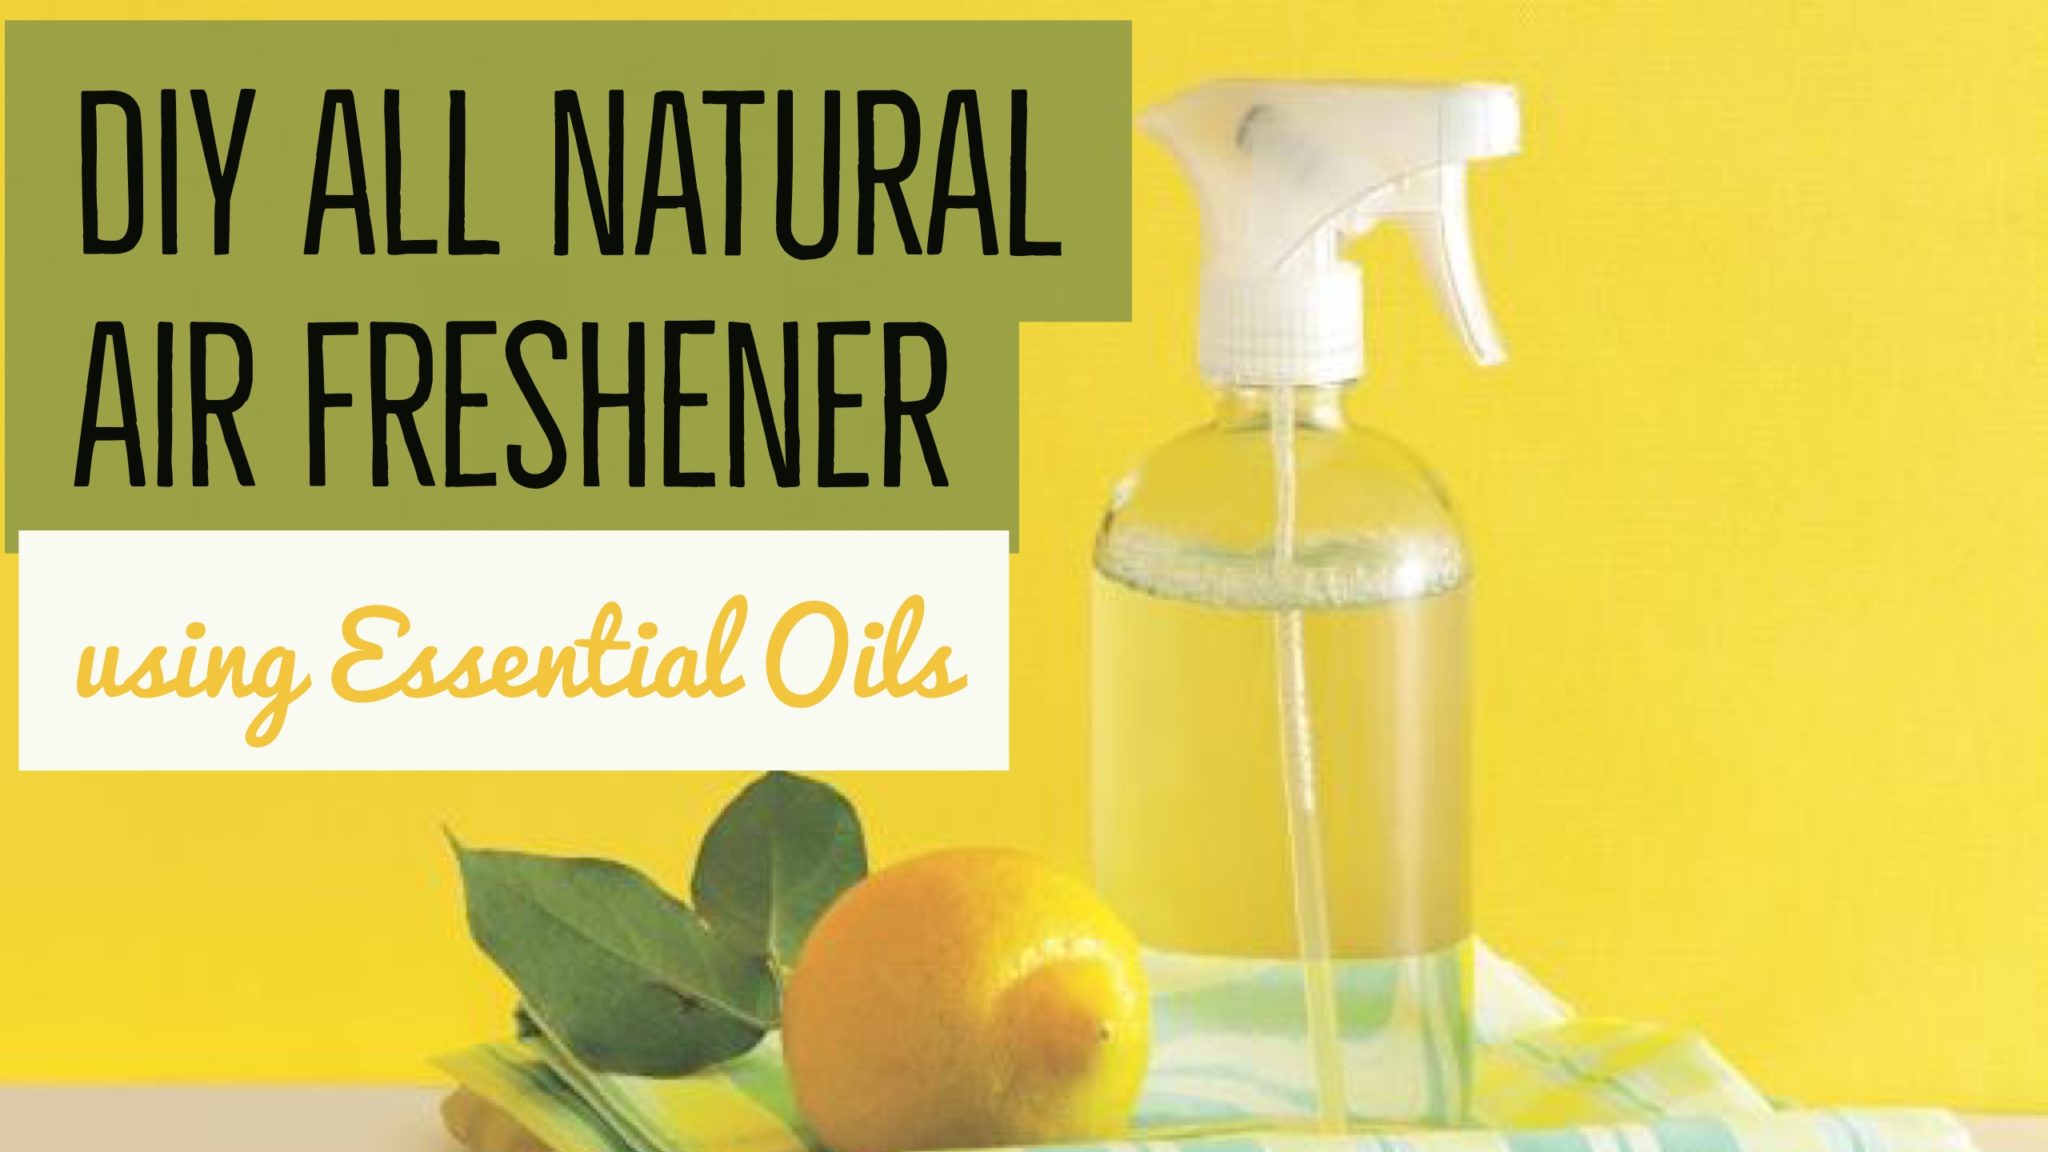 DIY All Natural Air Freshener recipe using essential oils.